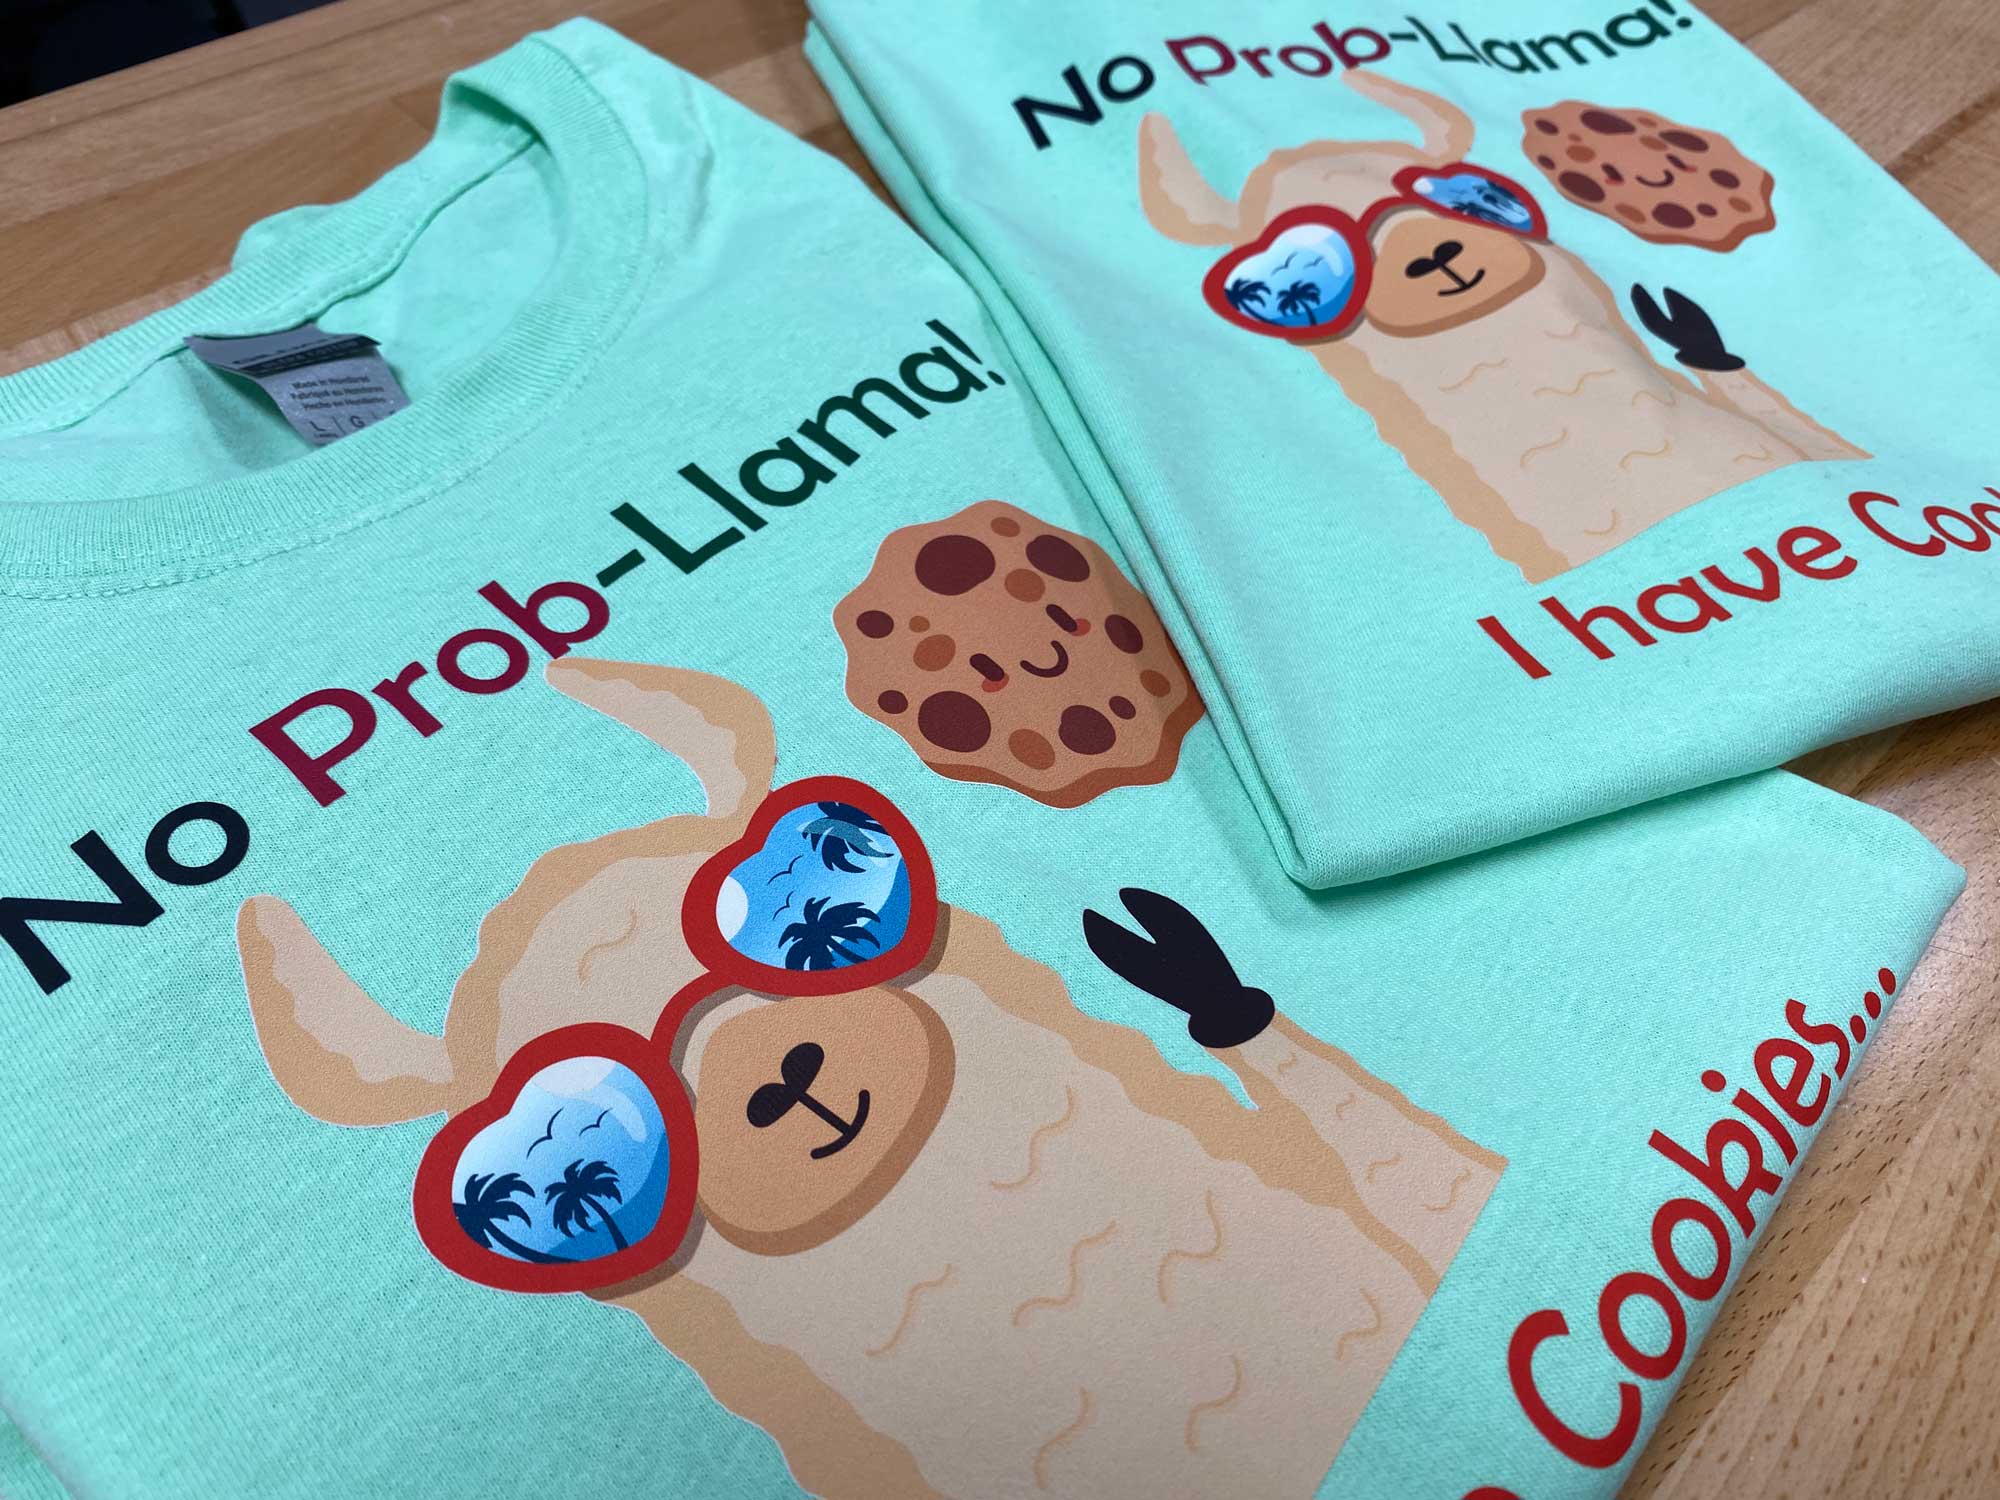 Girl Scouts no Prob-Llama tee shirt